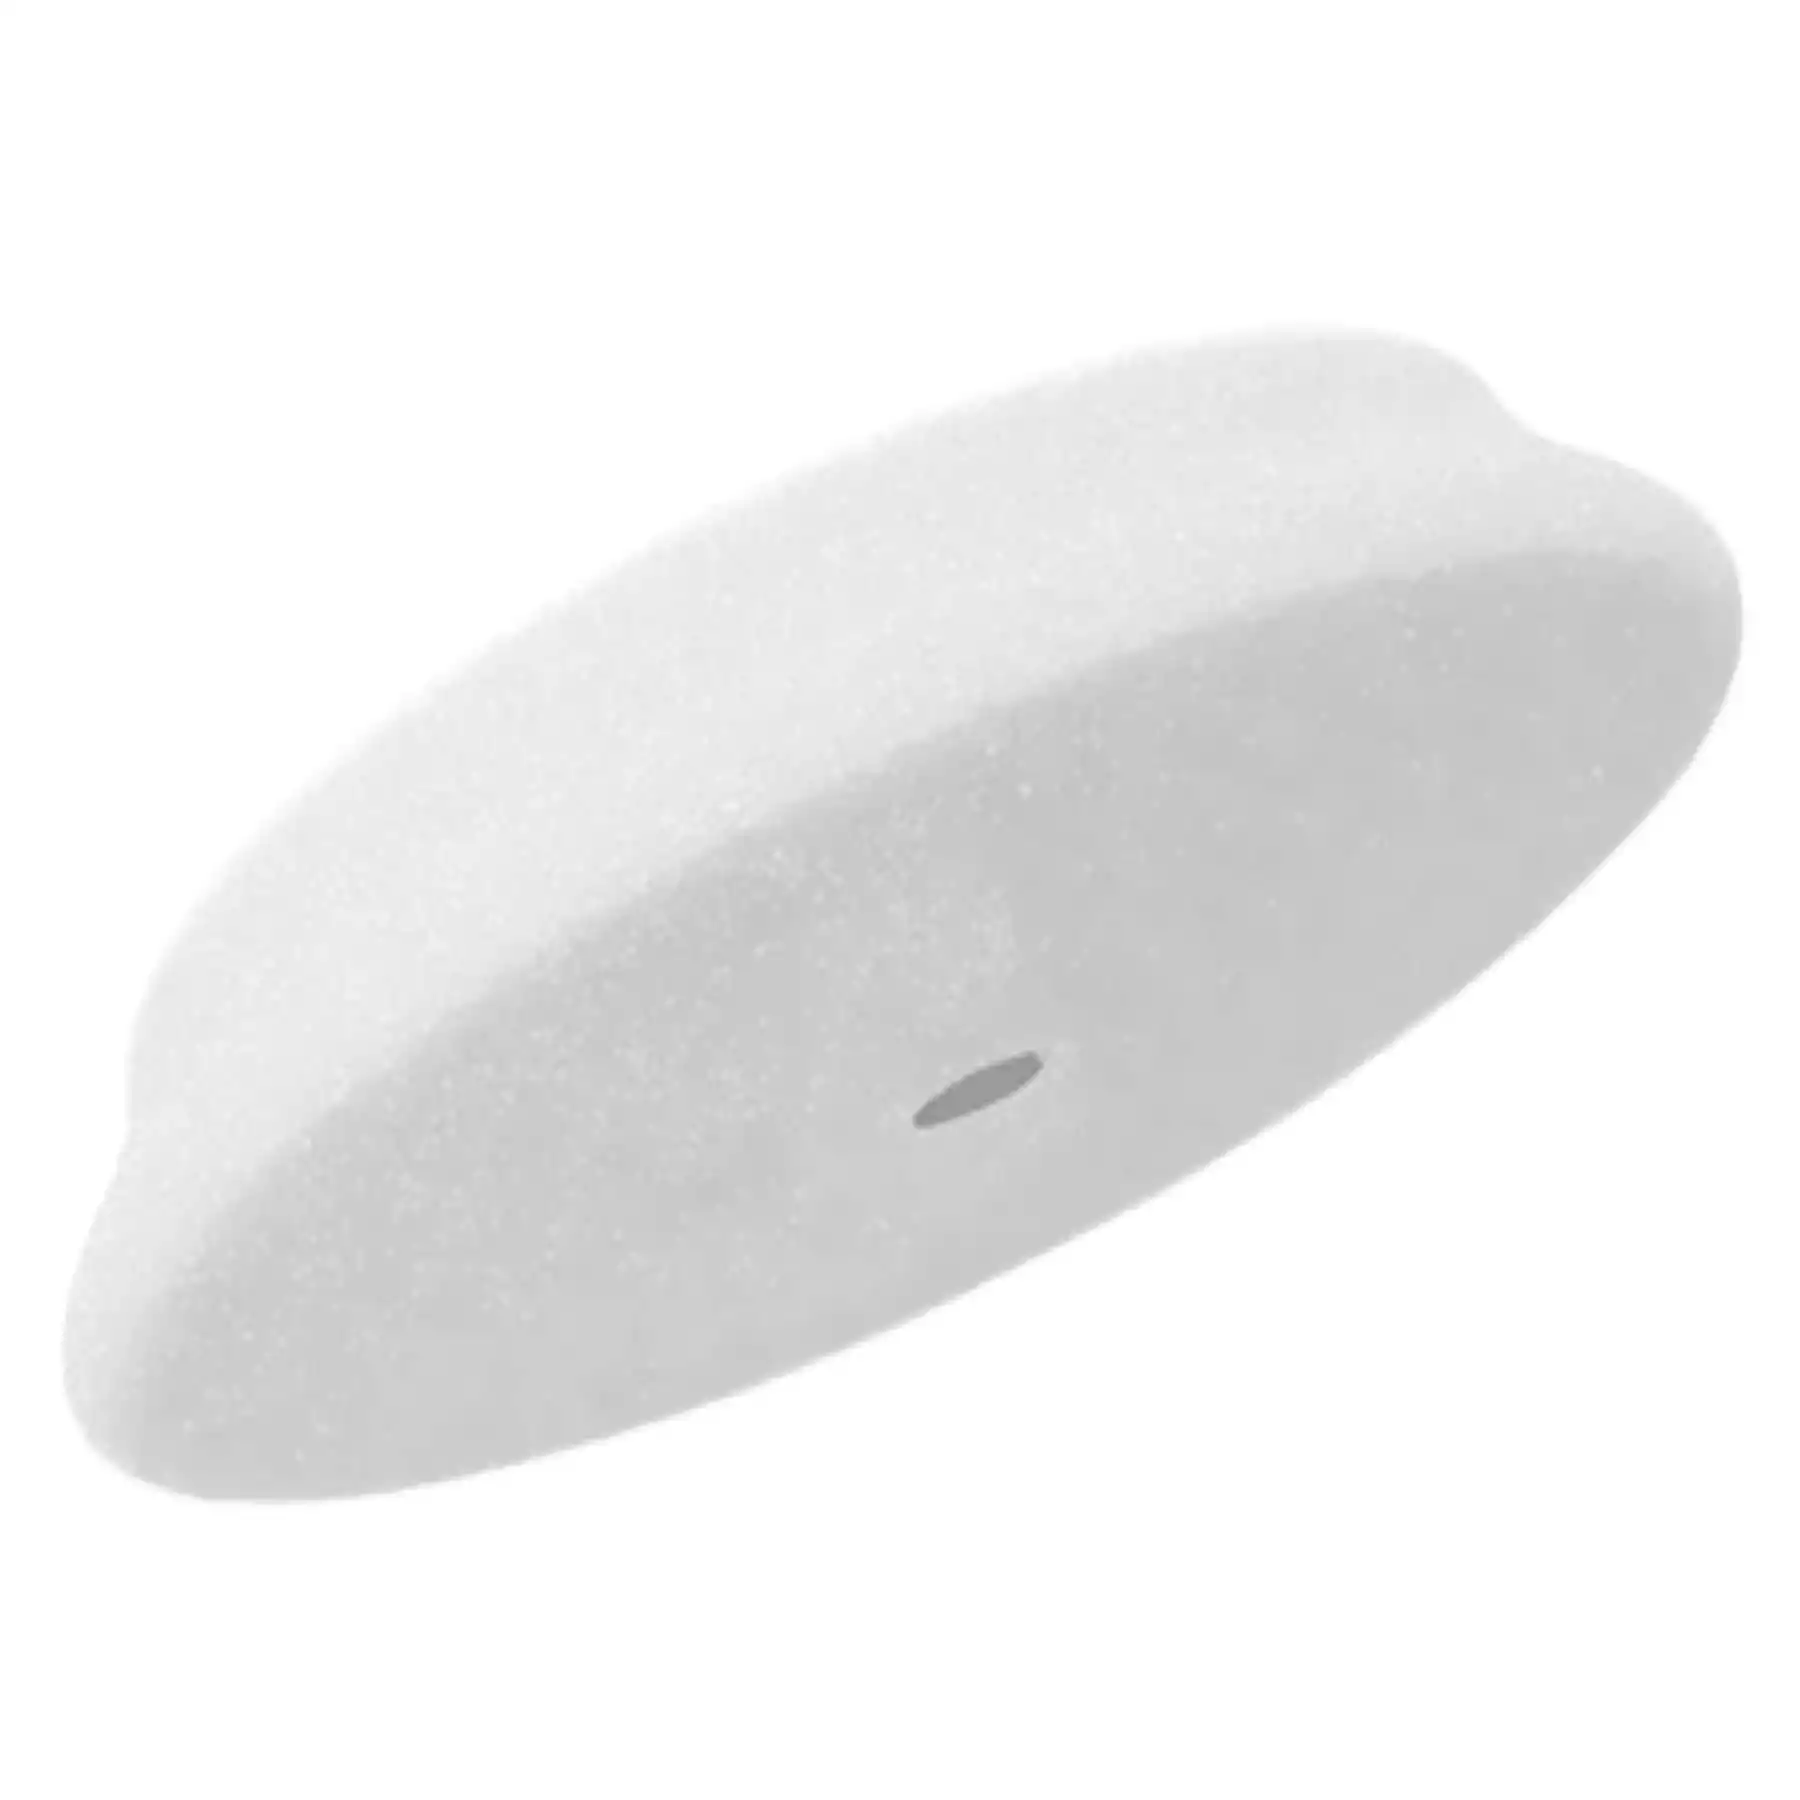 D-A Ultra Fine Polishing Foam Pad 150/180mm (9.DA180S)